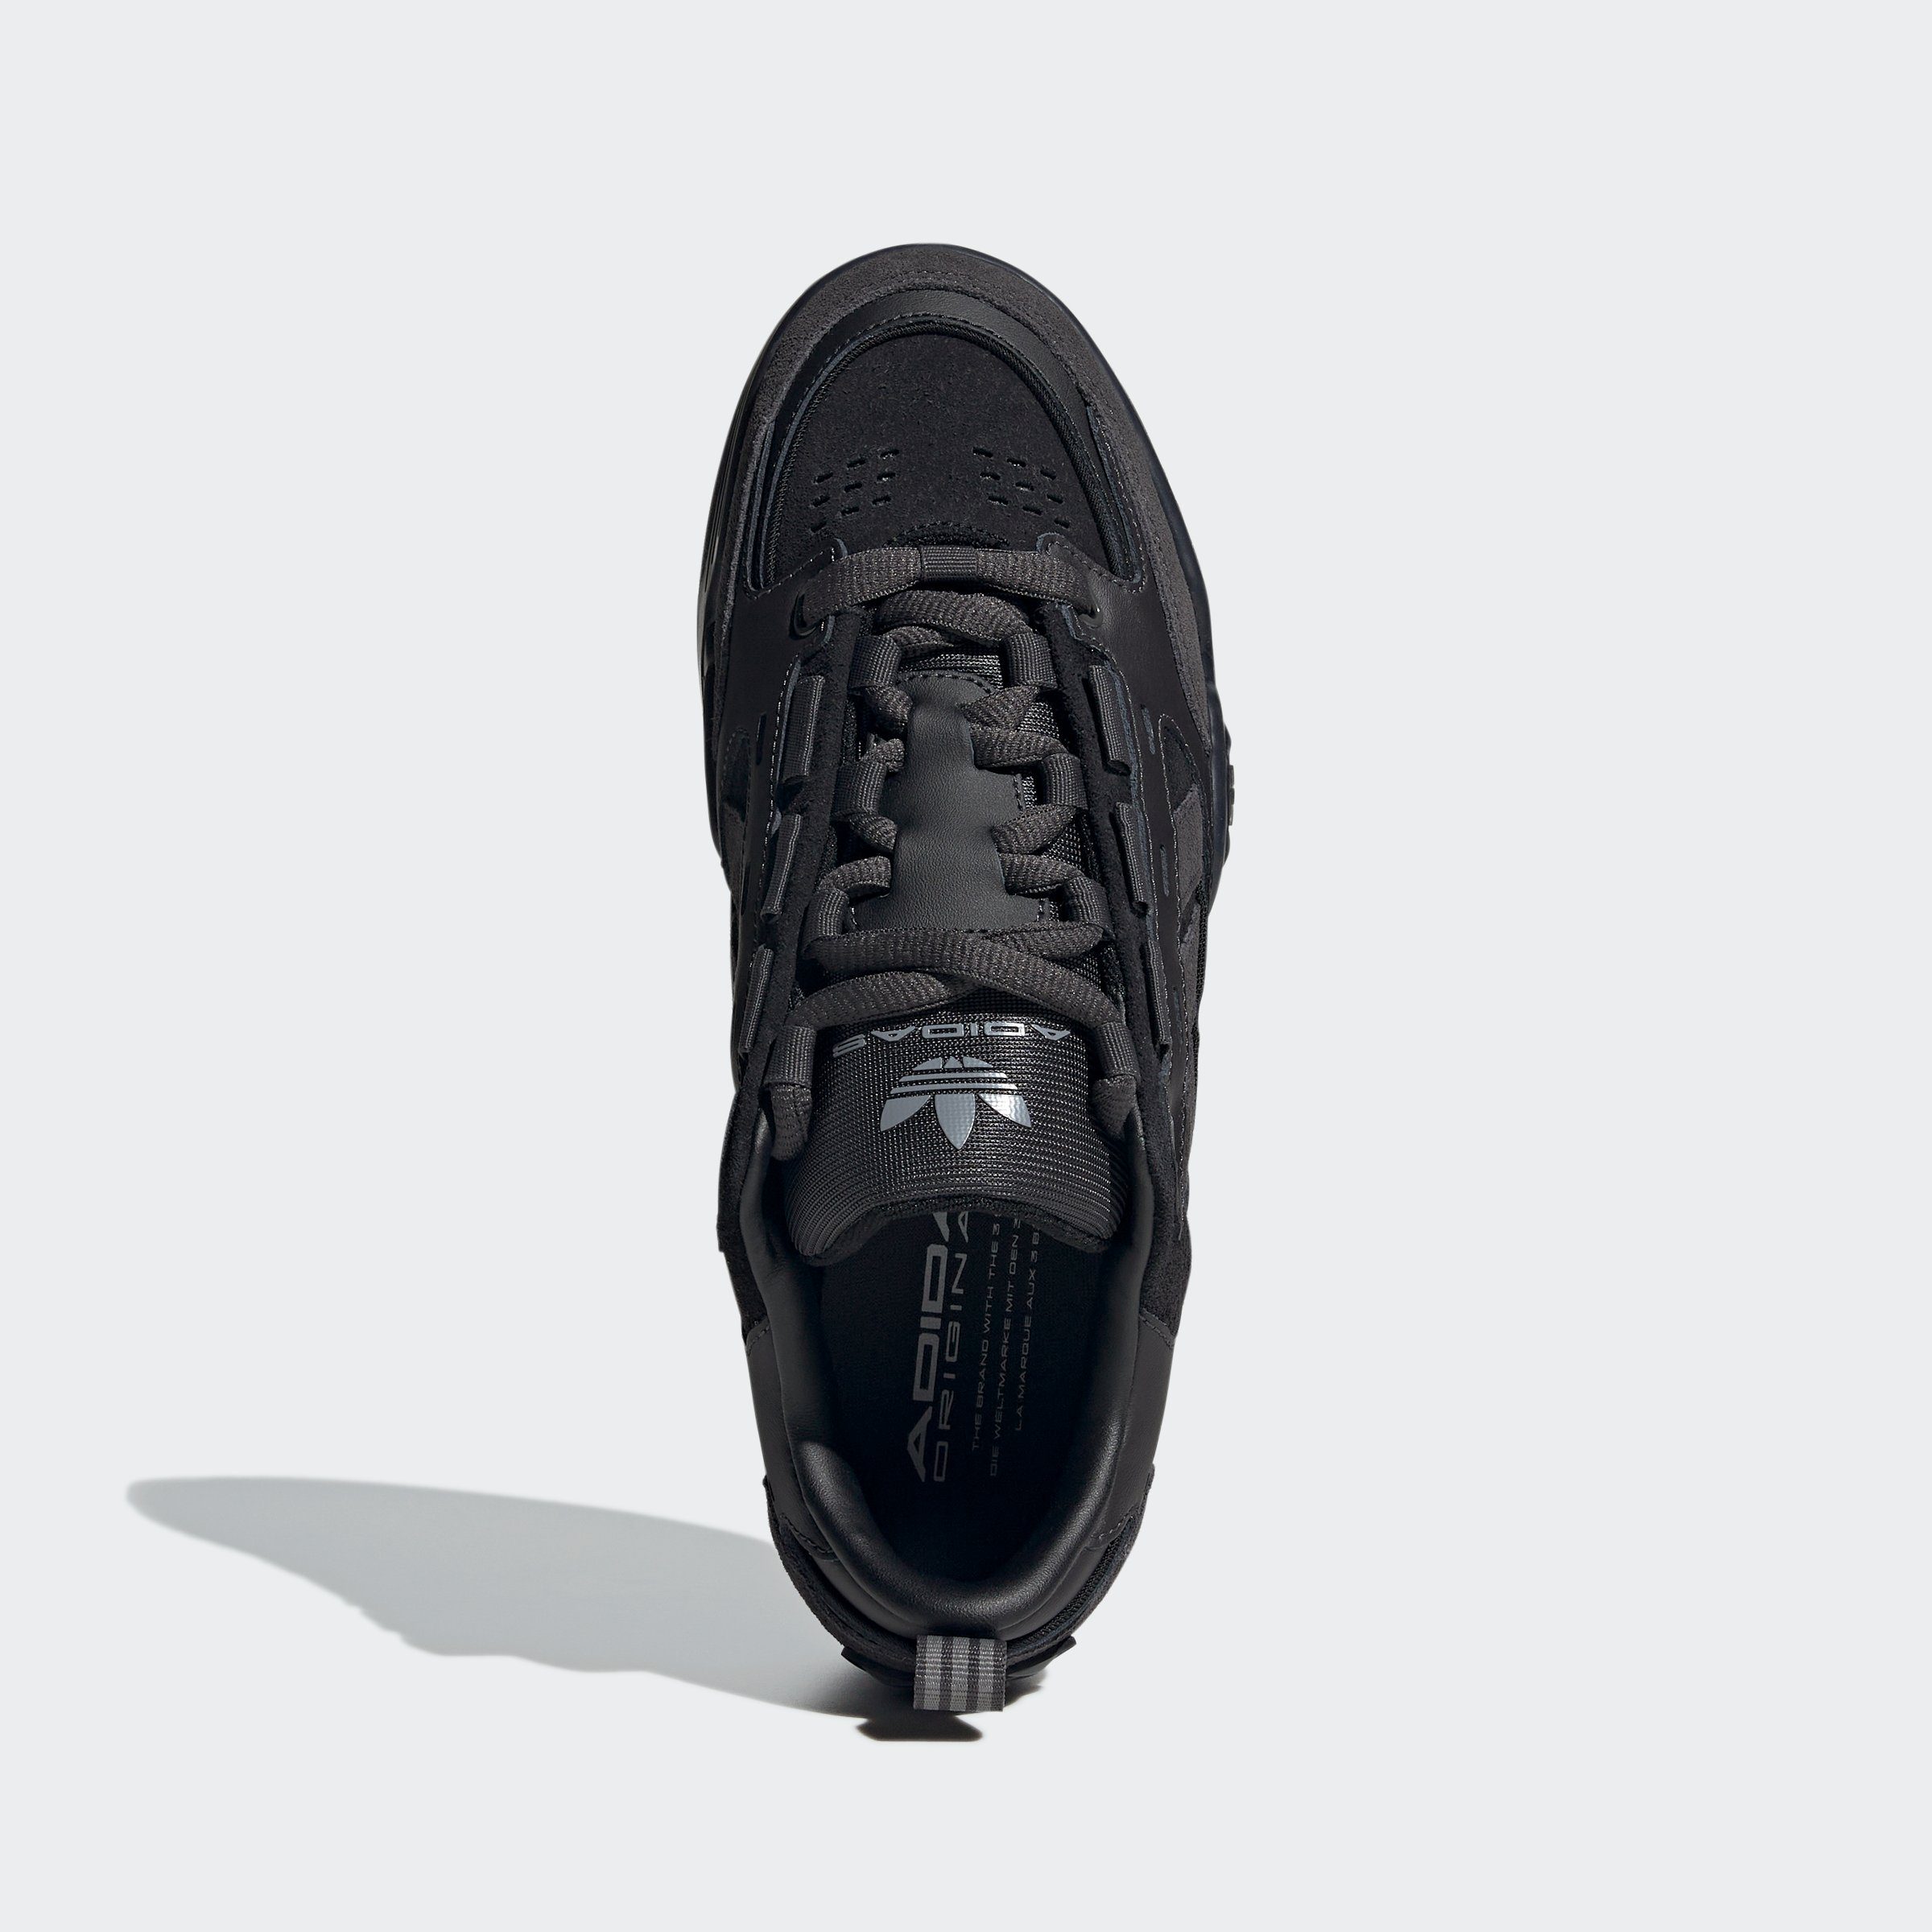 adidas / Black Black Black Originals Core Utility / Utility Sneaker ADI2000